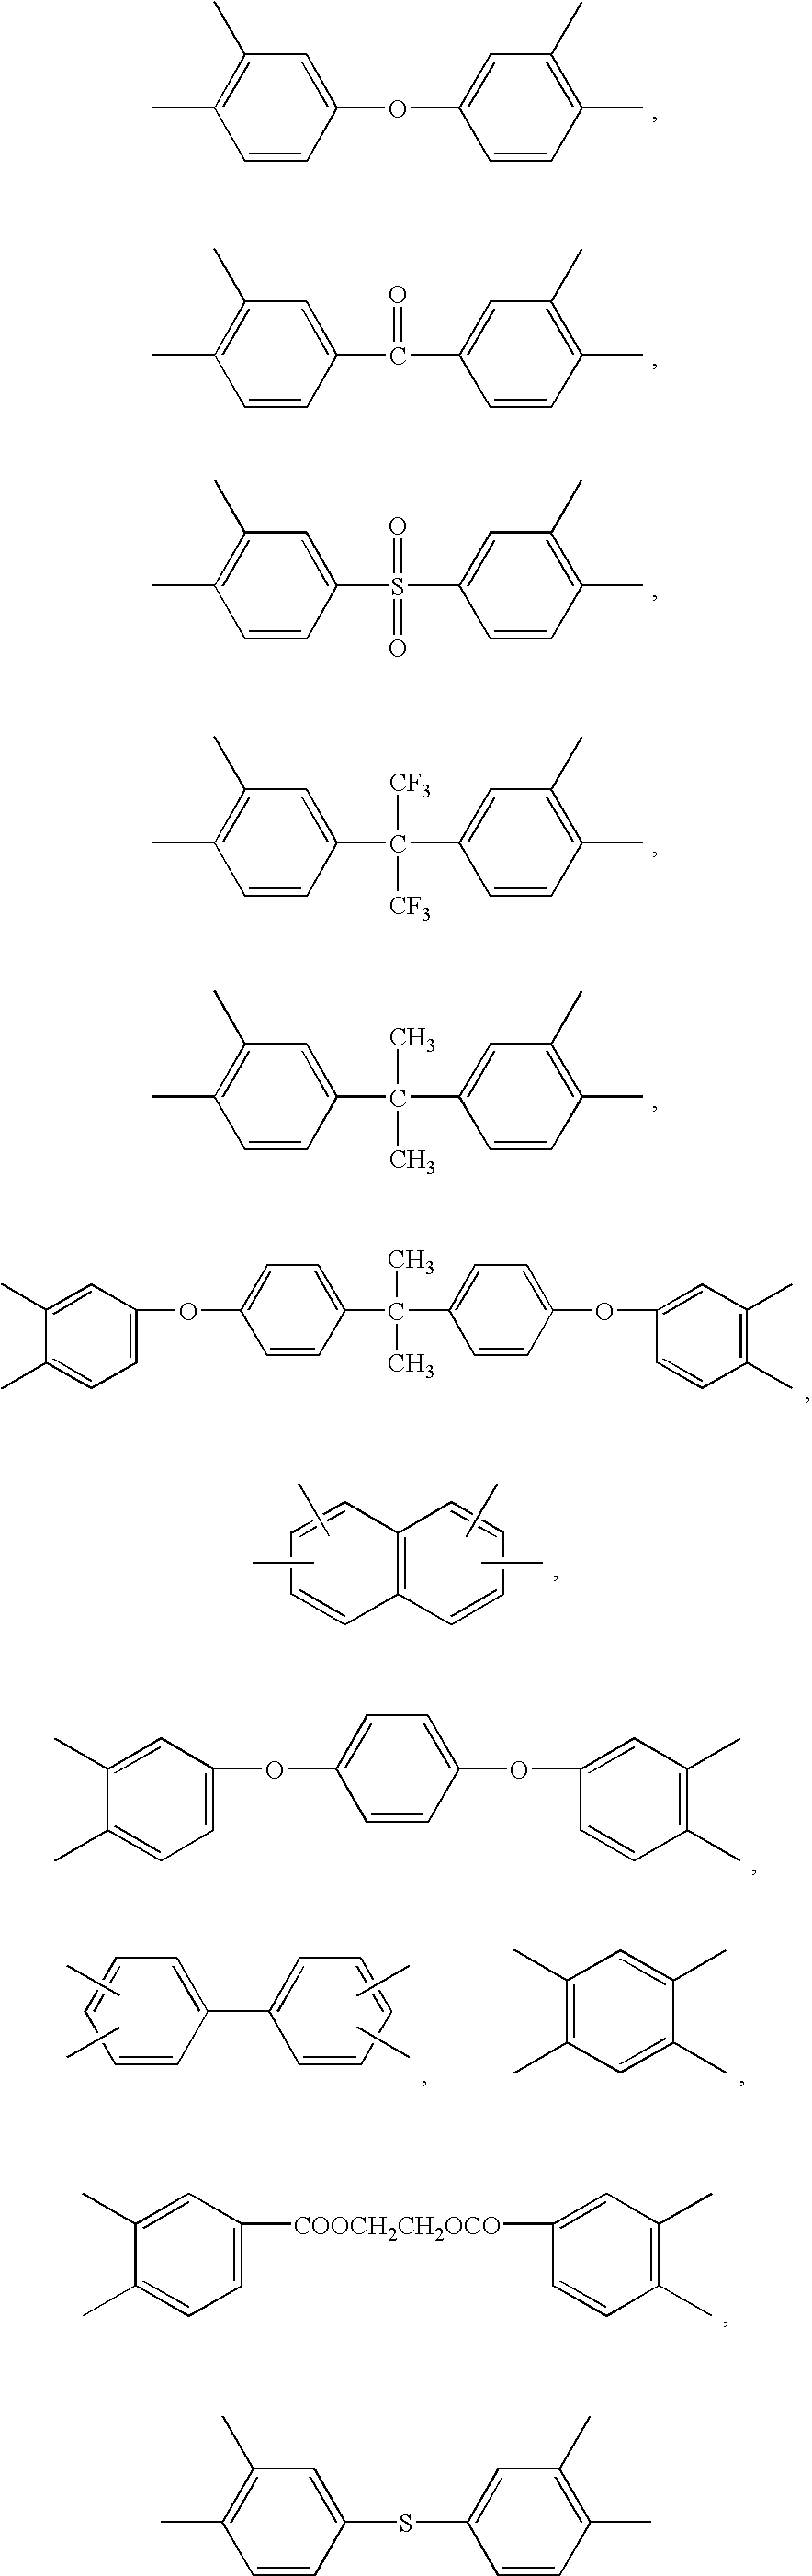 Polybenzoxazole Polymer-Based Mixed Matrix Membranes